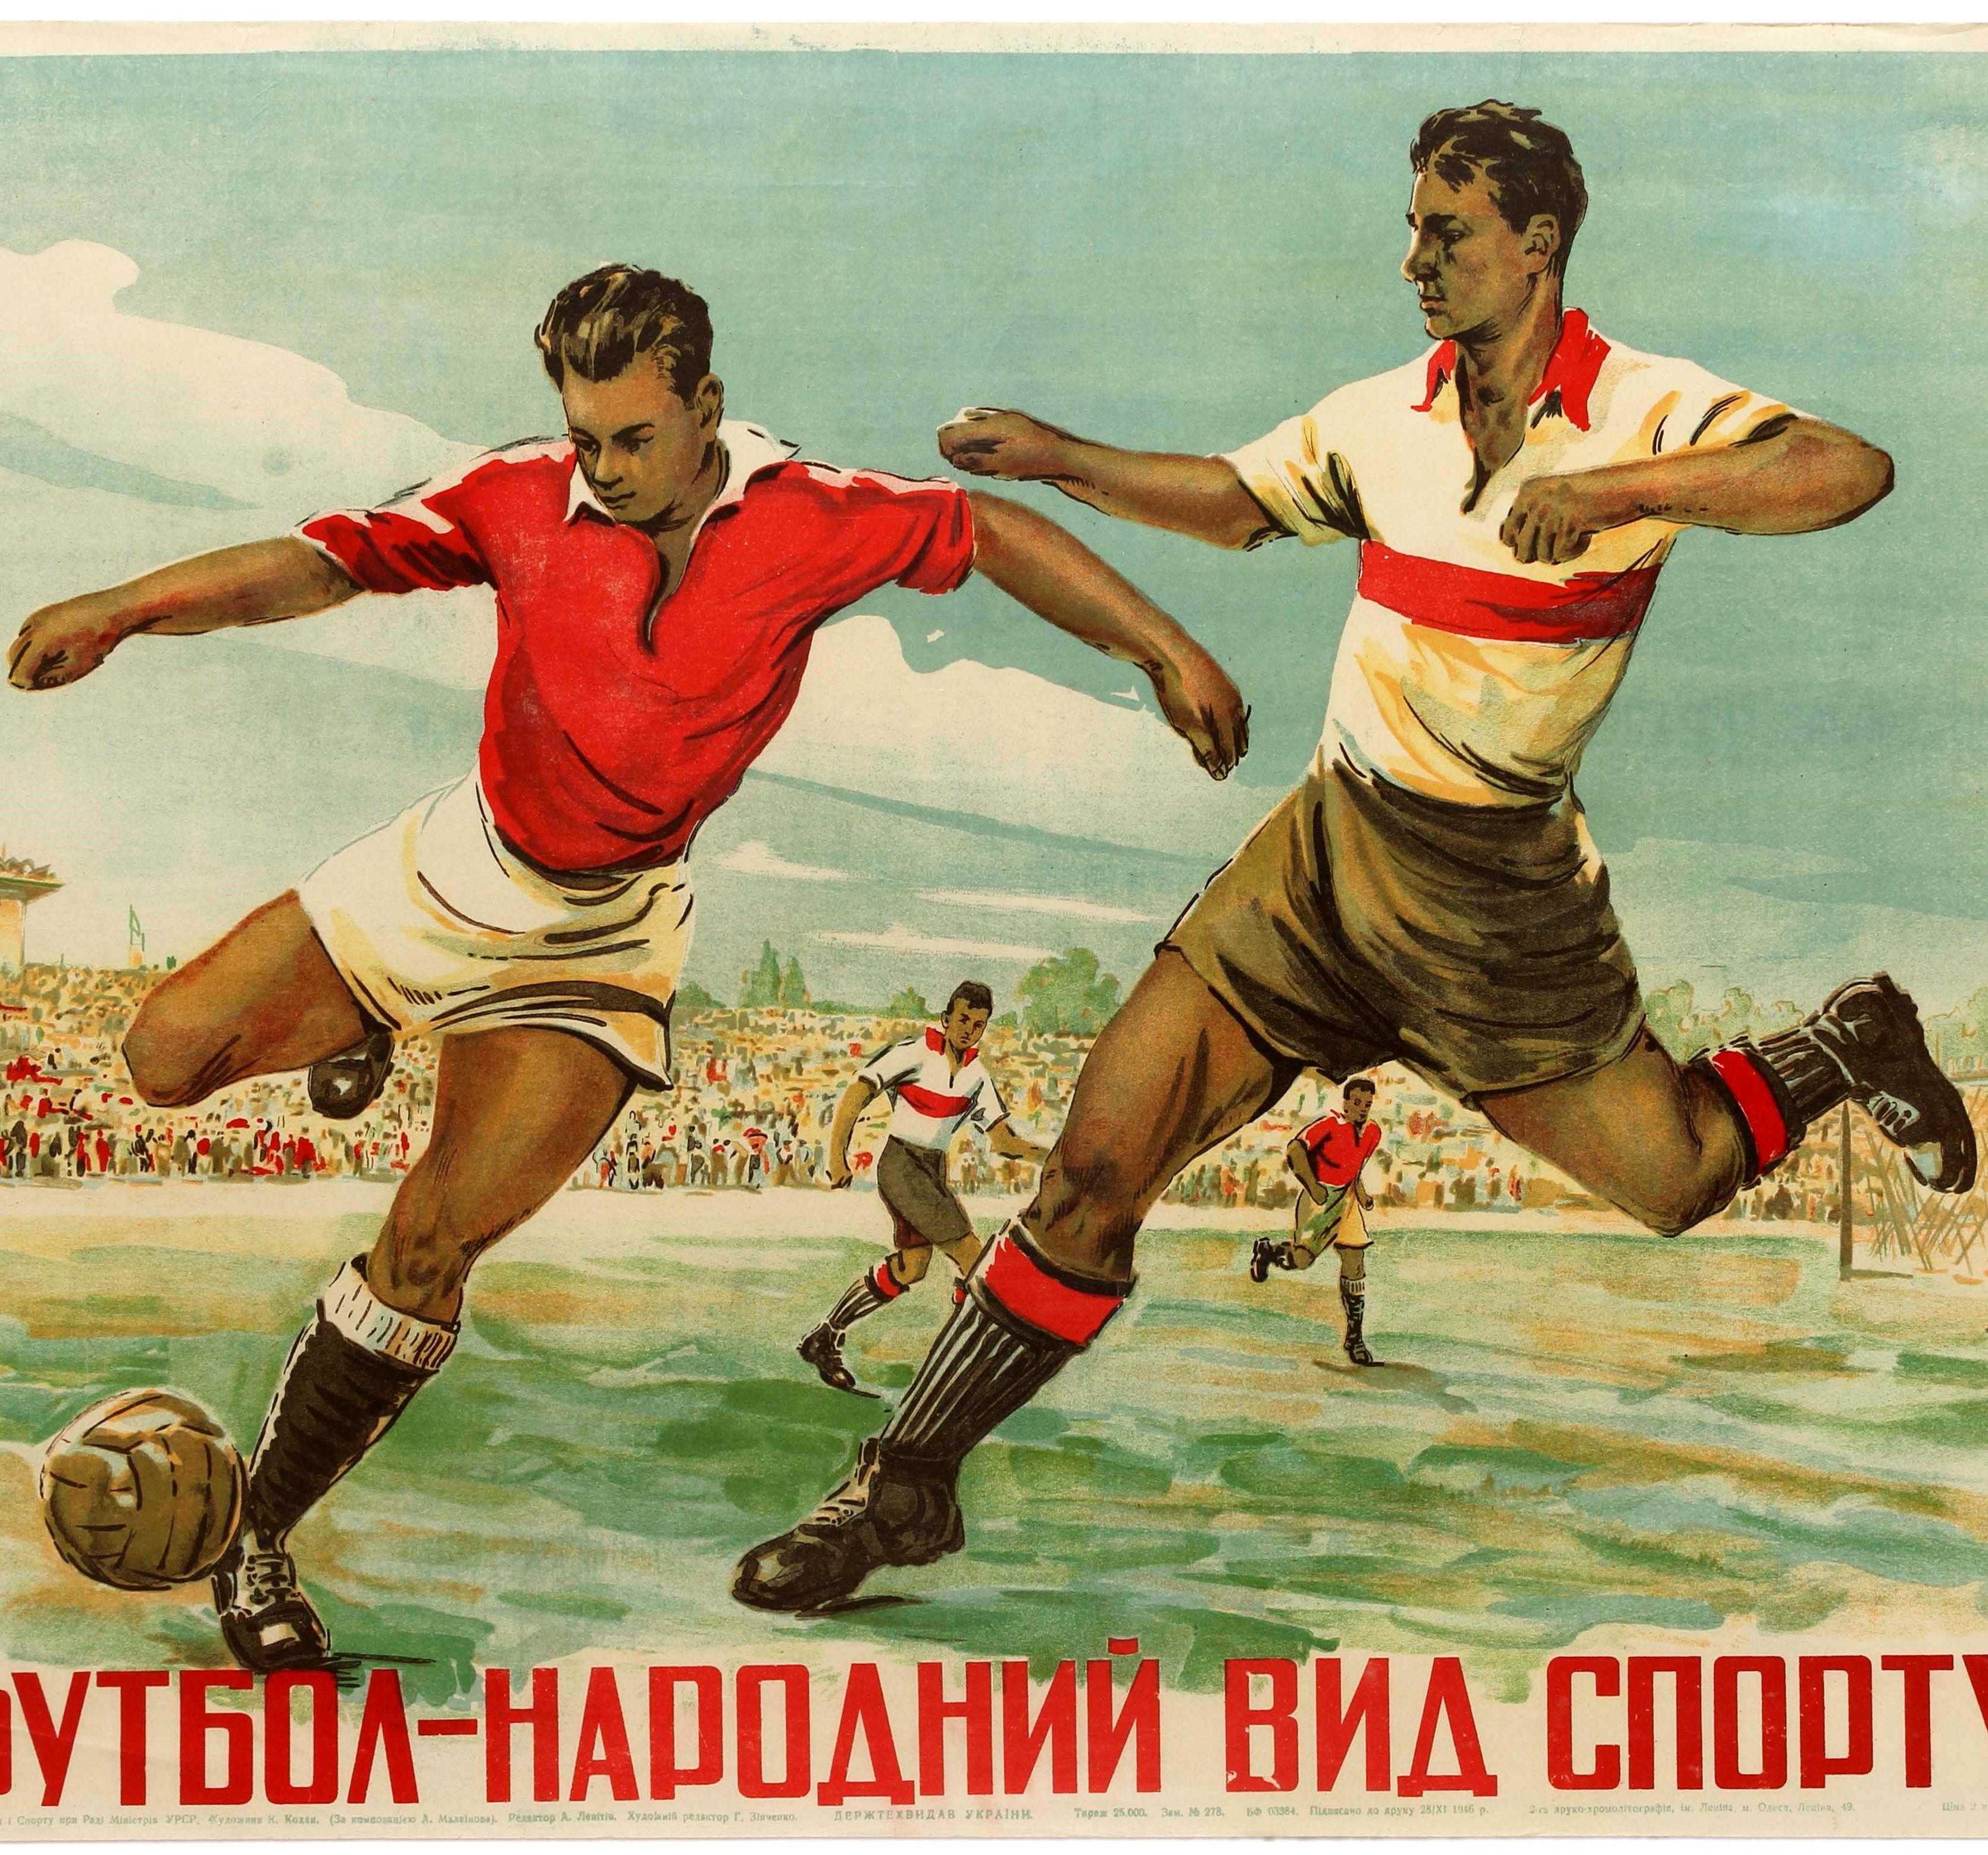 Original Vintage Poster For Football - National Sport Ukraine Ft. Football Match - Print by K. Kohin